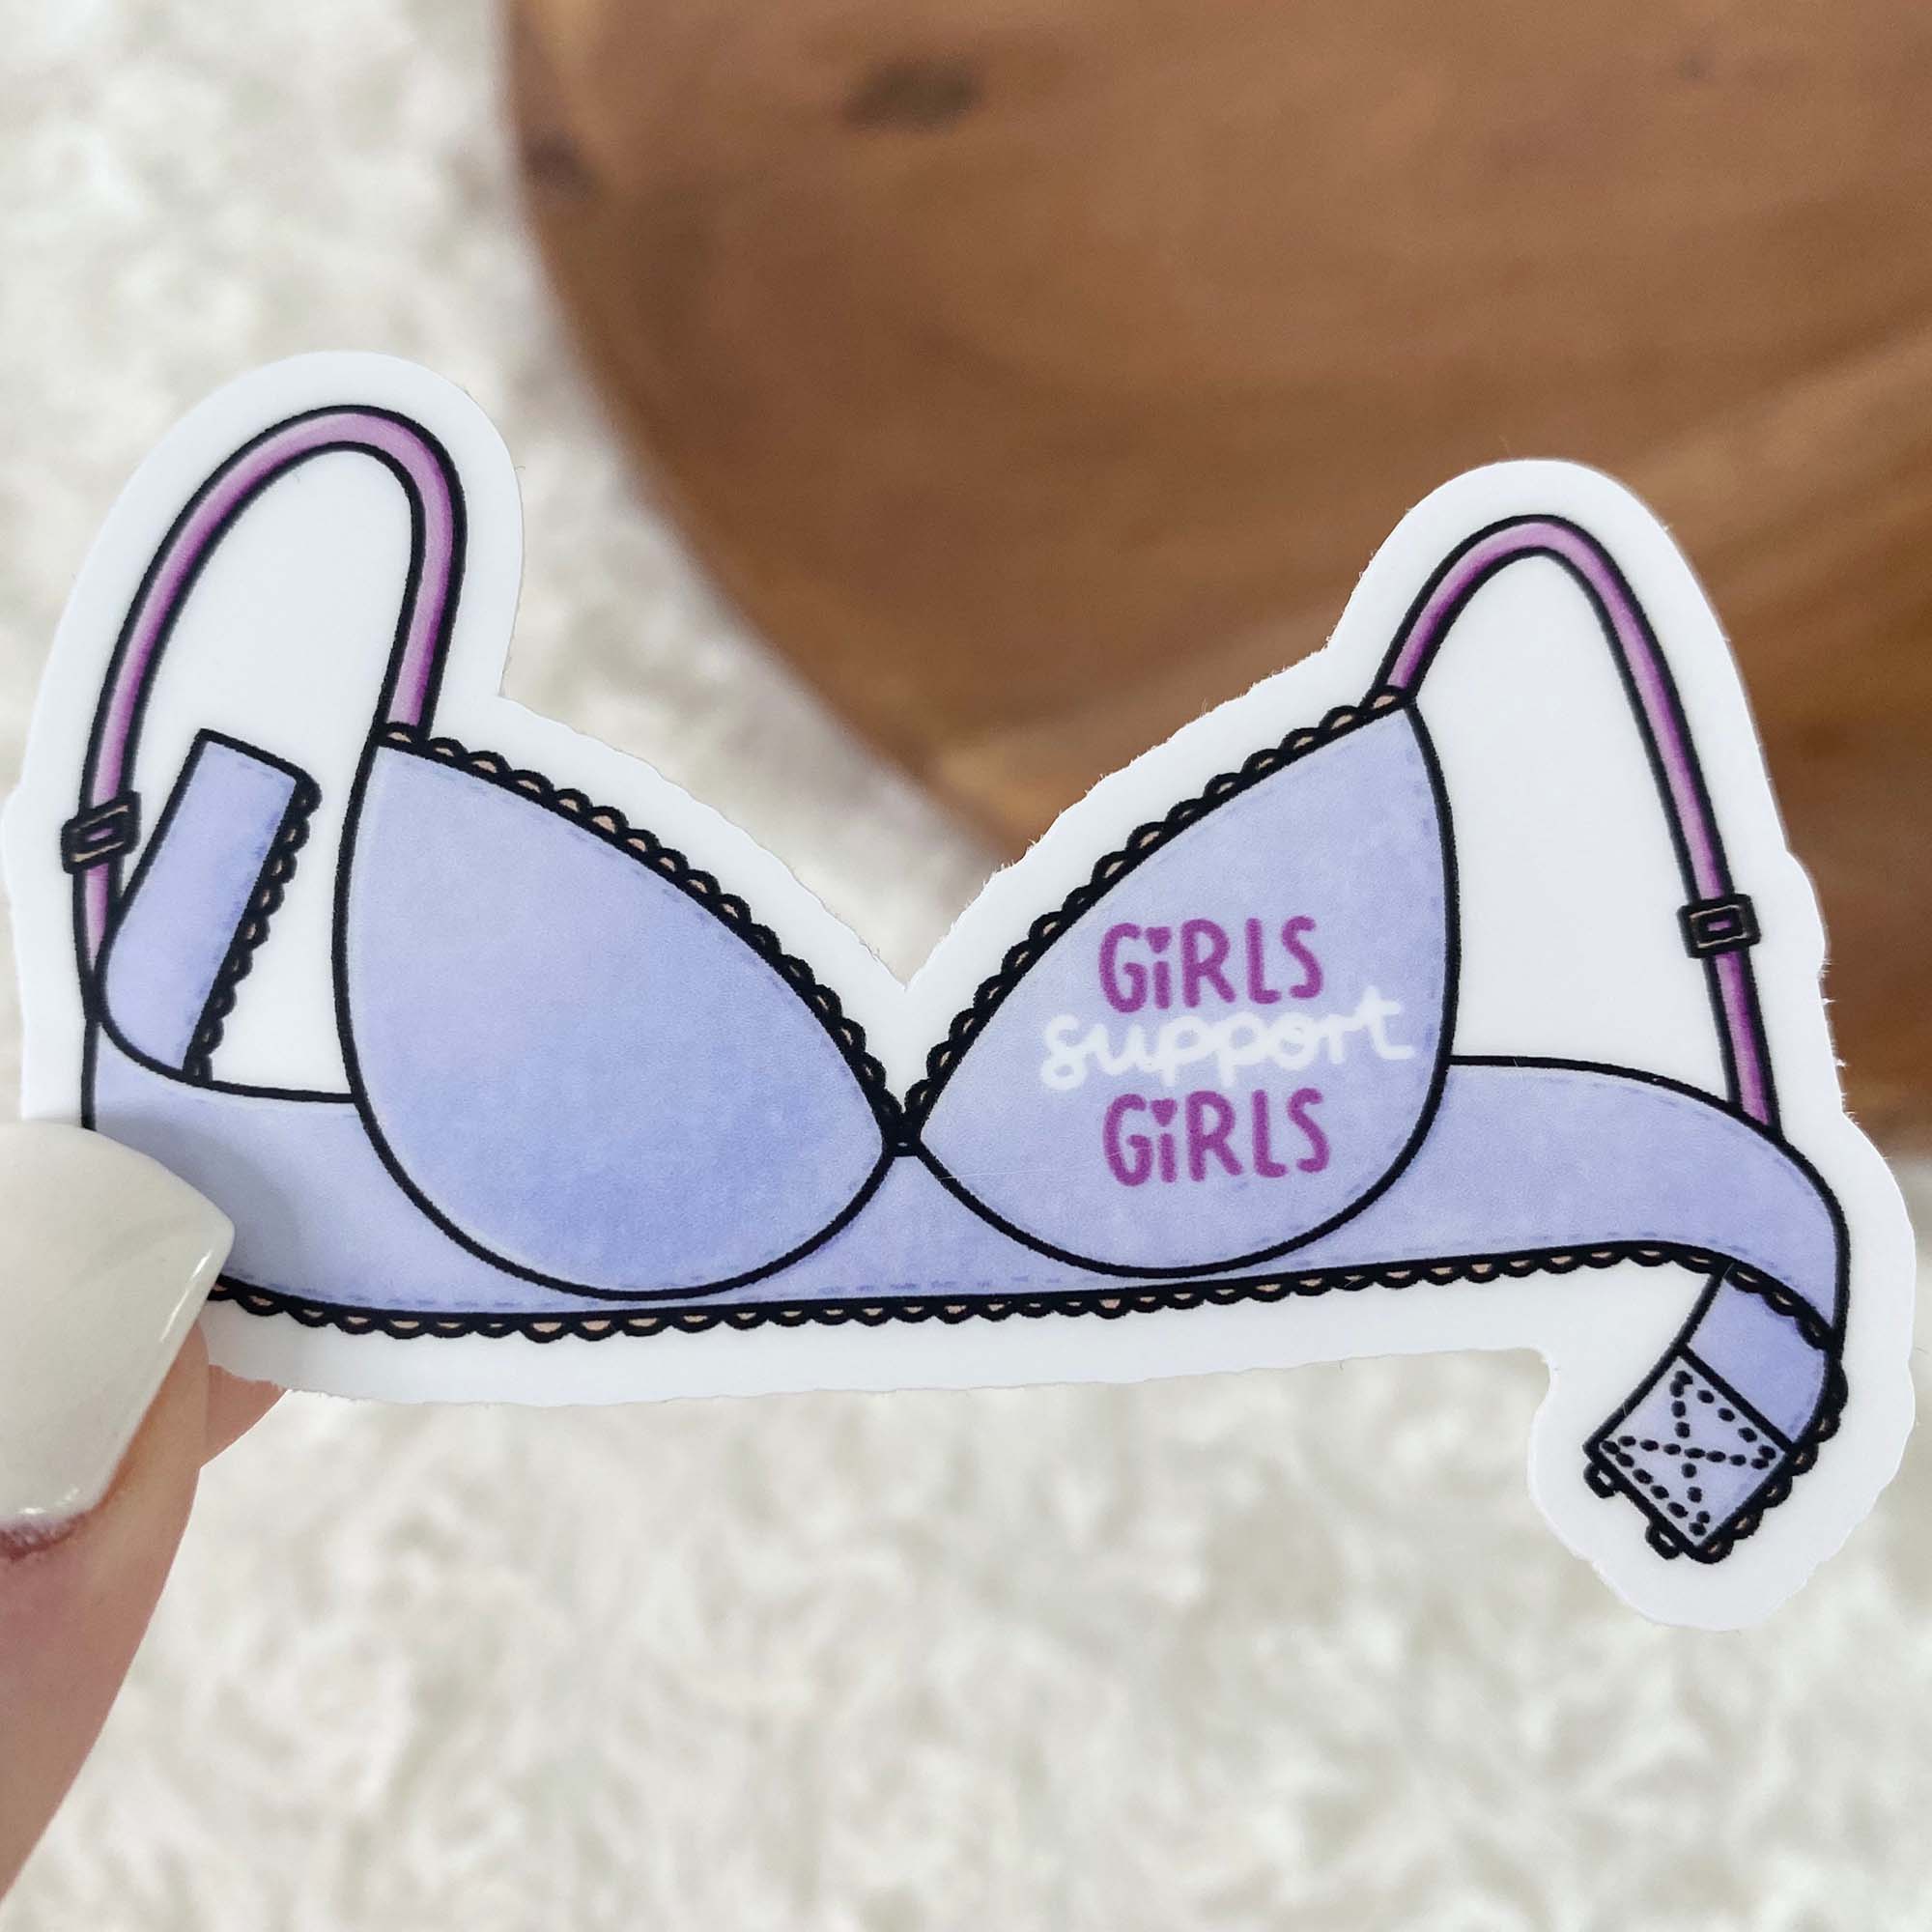 Girls Support Girls Bra Sticker – Big Moods